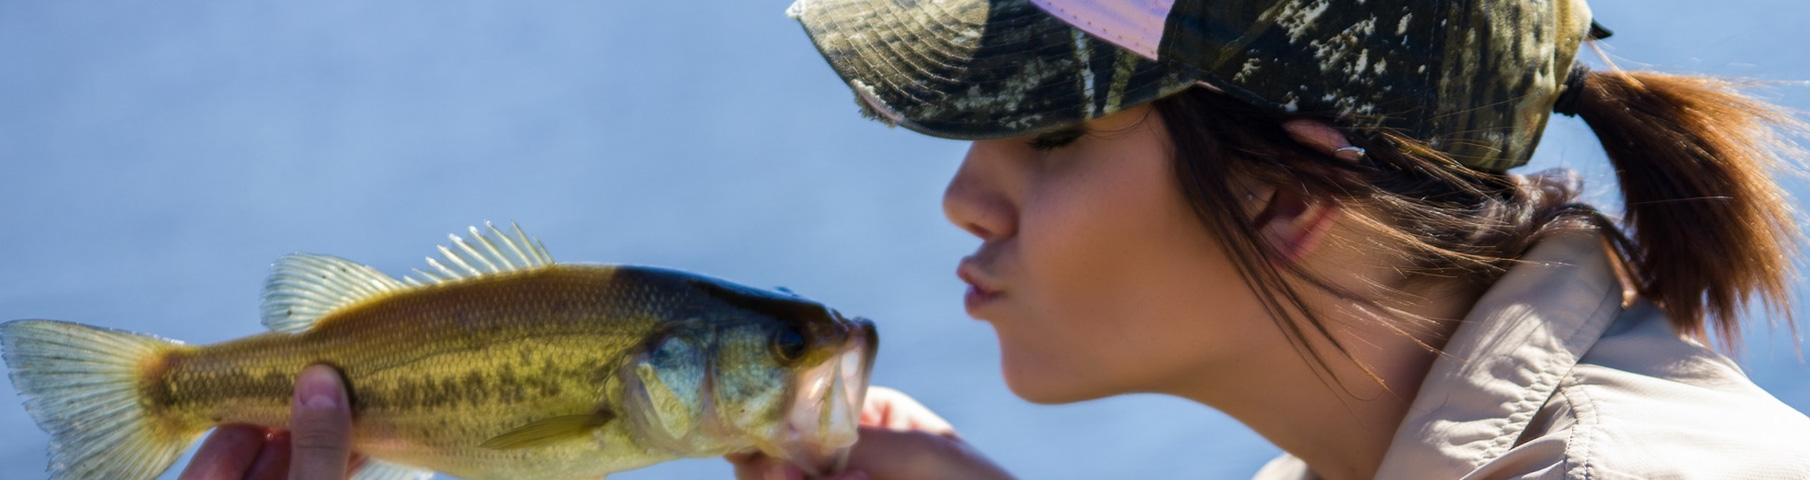 girl kissing fish